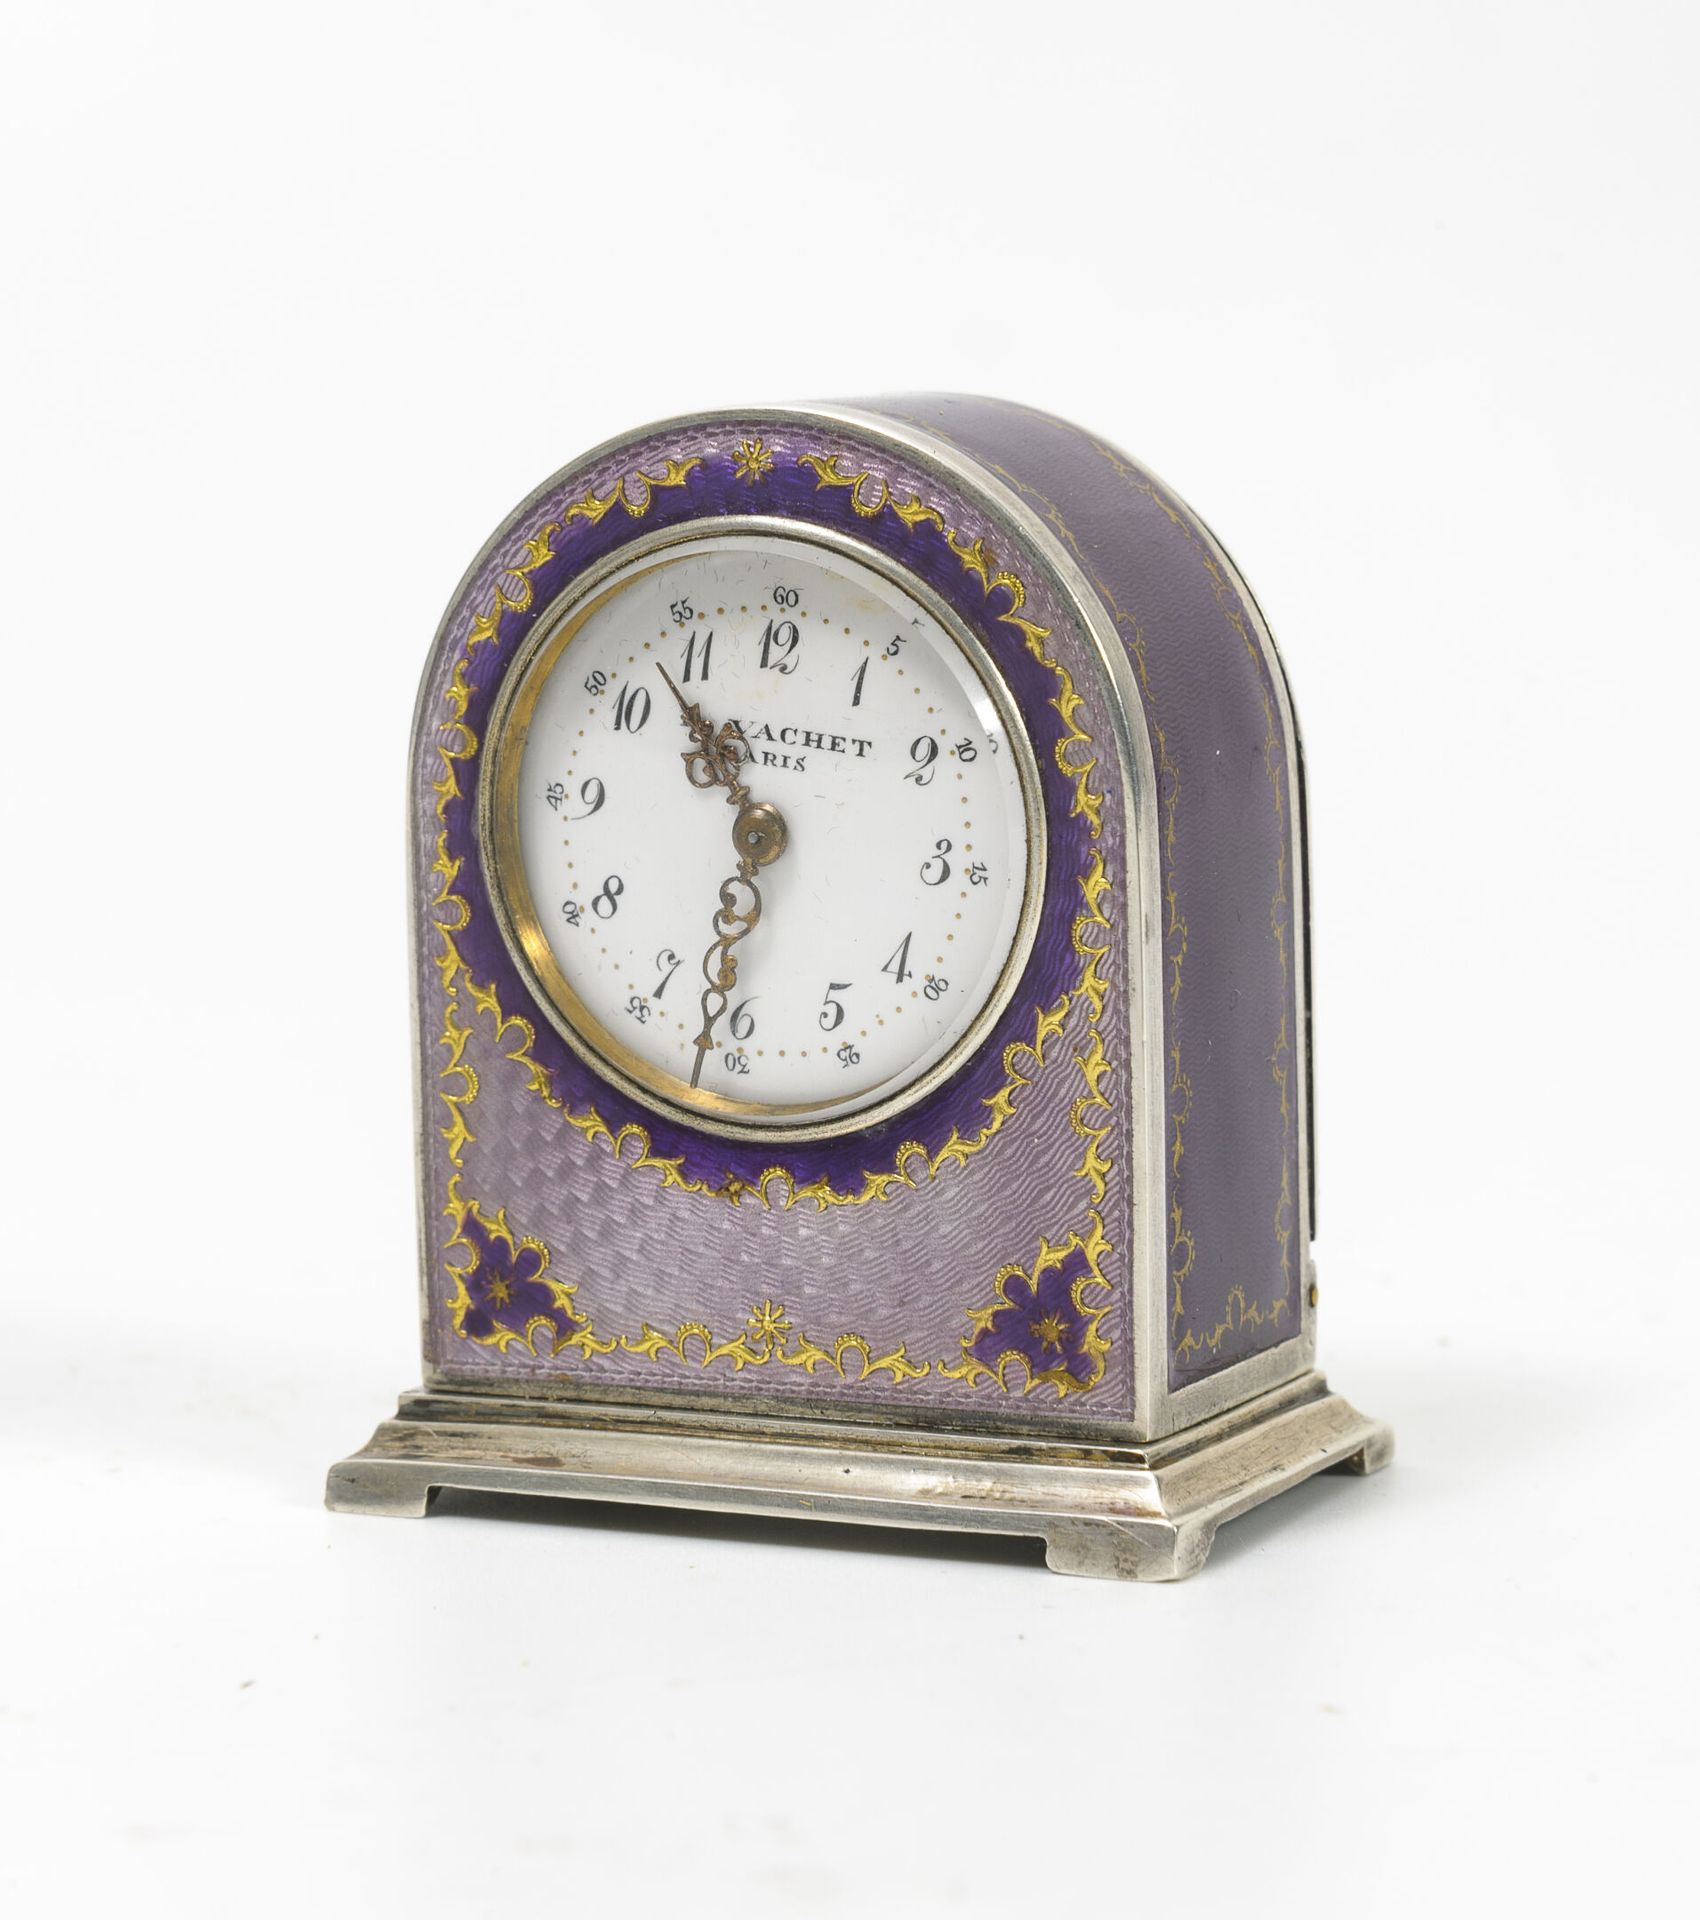 VACHET, Paris 
Desk clock, silver (min. 800) and enamel of purple and lilac colo&hellip;